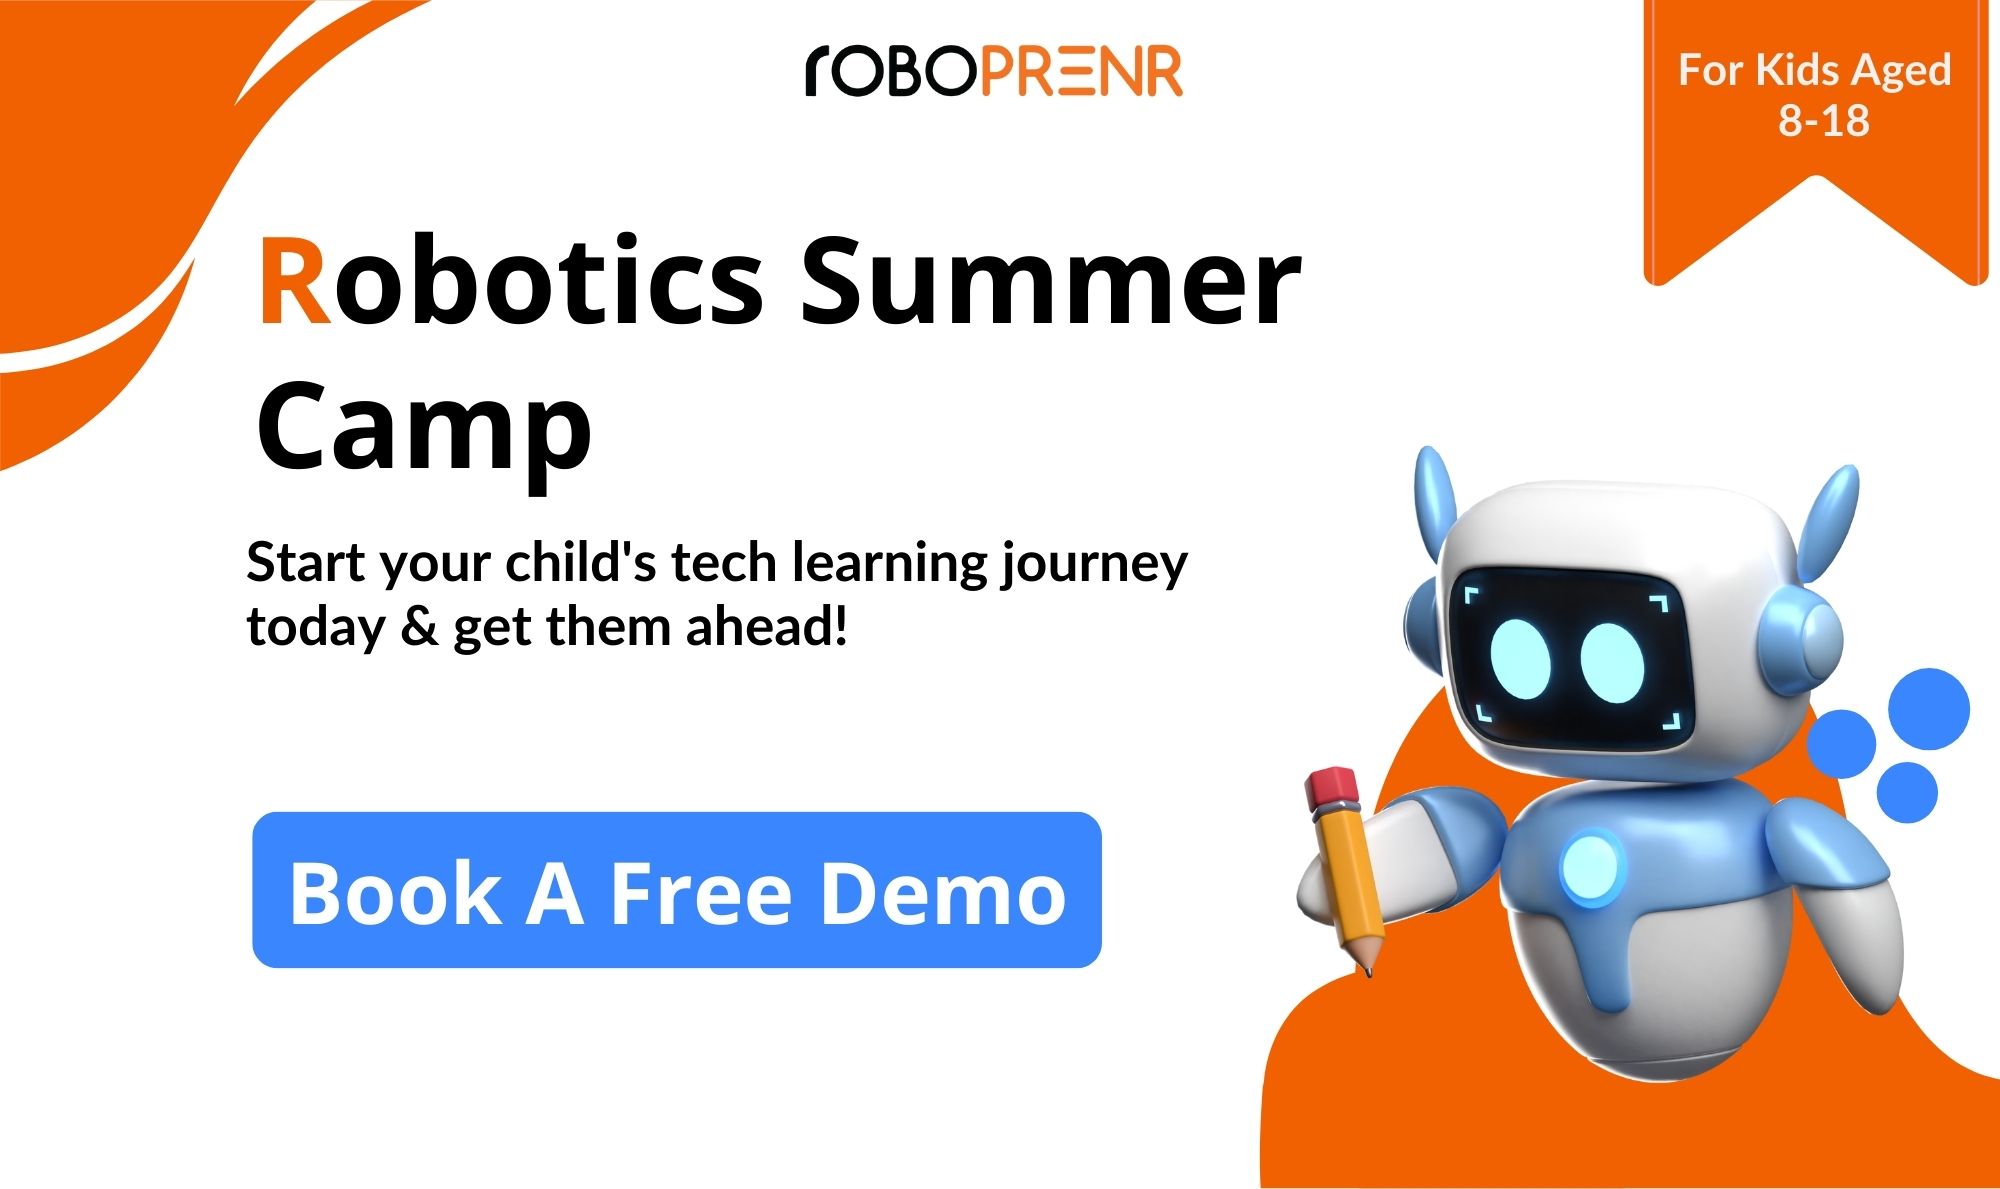 Roboprenr Summer Camp